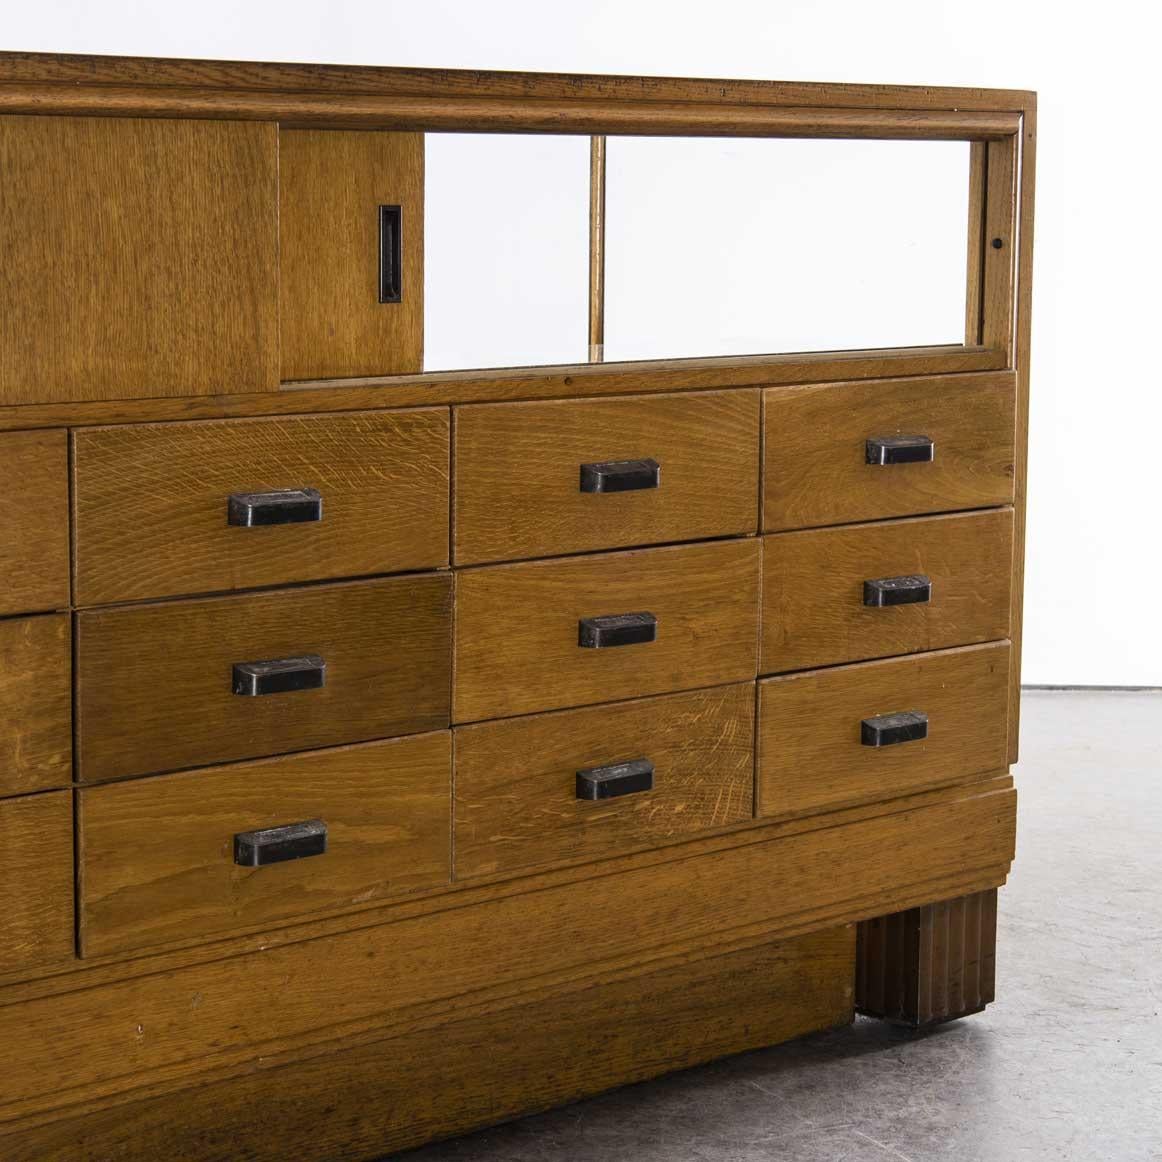 Britannique Pollards Fifteen Drawer Brass Haberdashery Cabinet à quinze tiroirs en laiton des années 1940 en vente